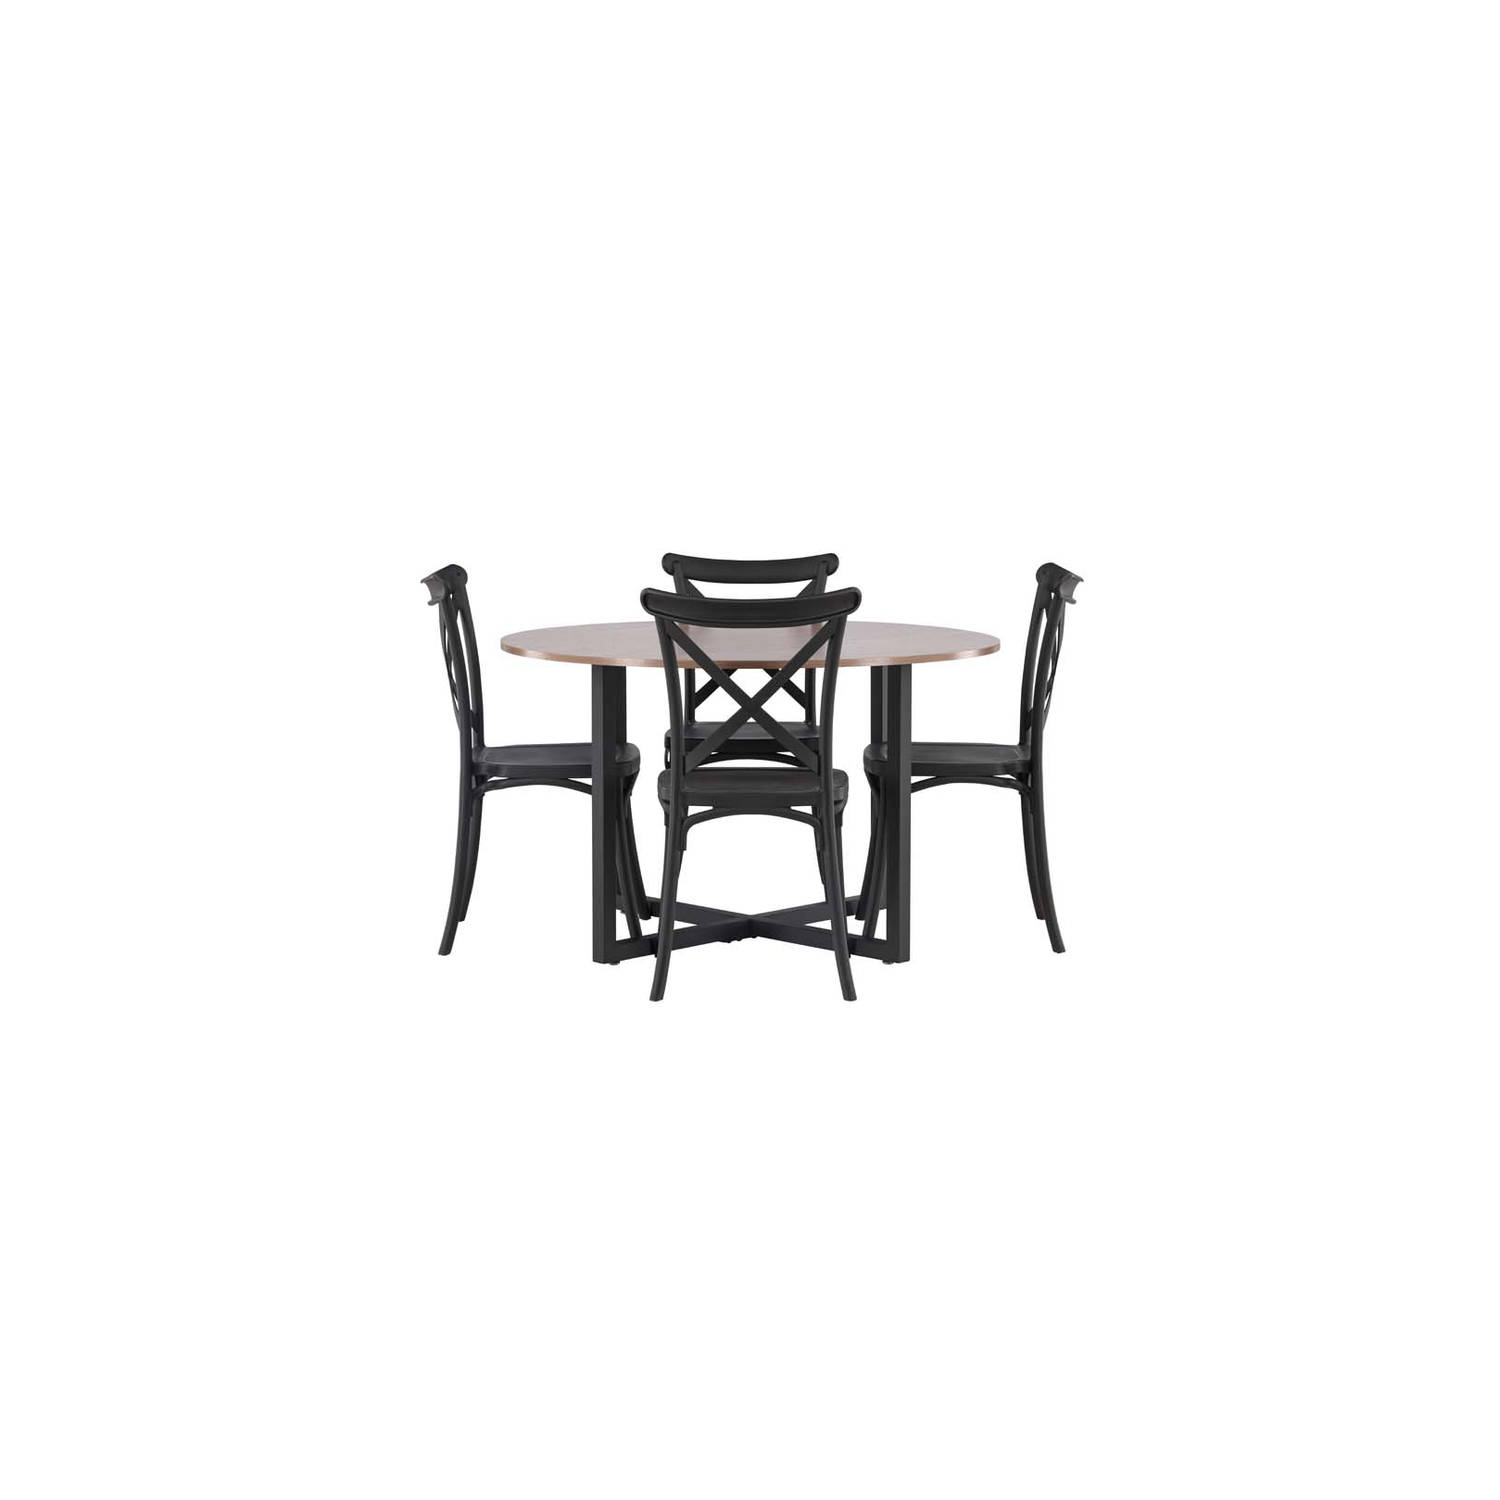 Durango eethoek tafel okkernoot decor en 4 Crosett stoelen zwart.